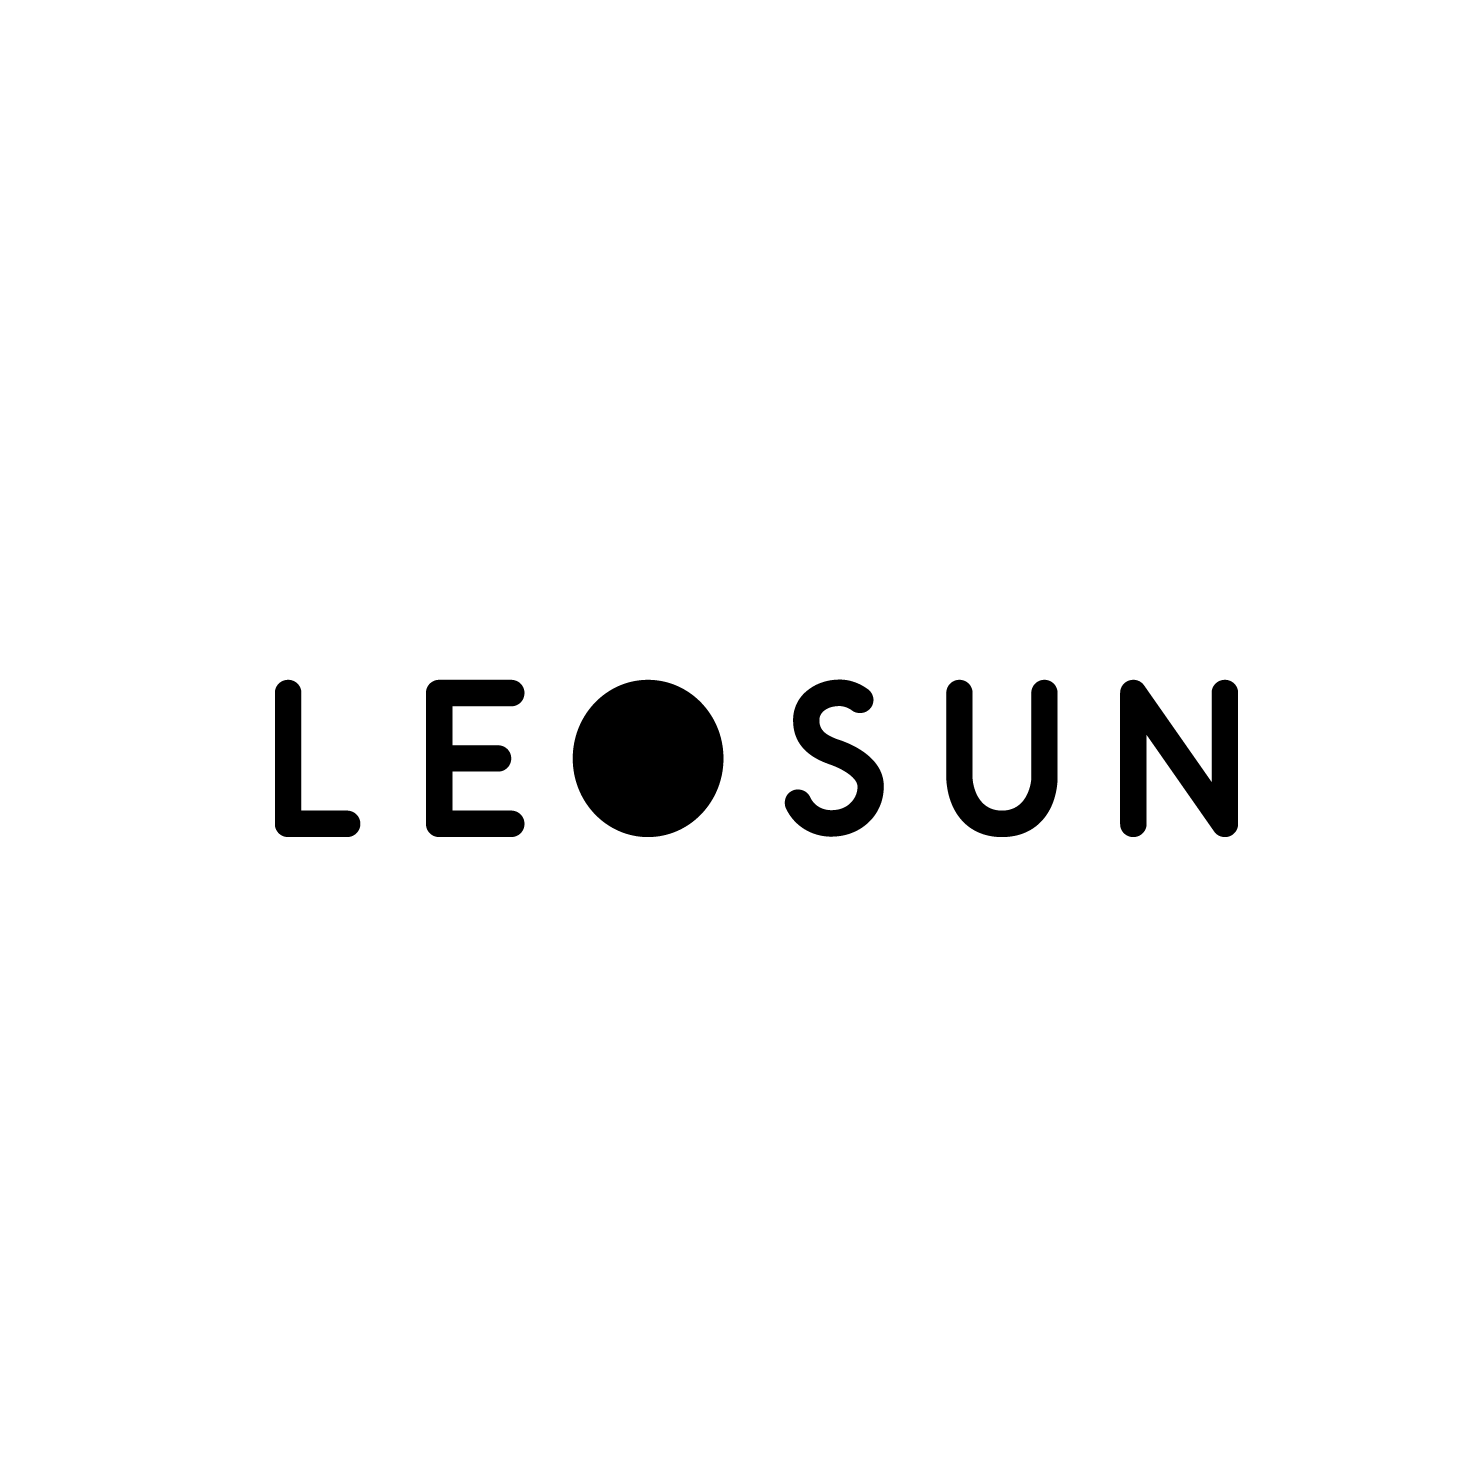 Leosun Logo.png